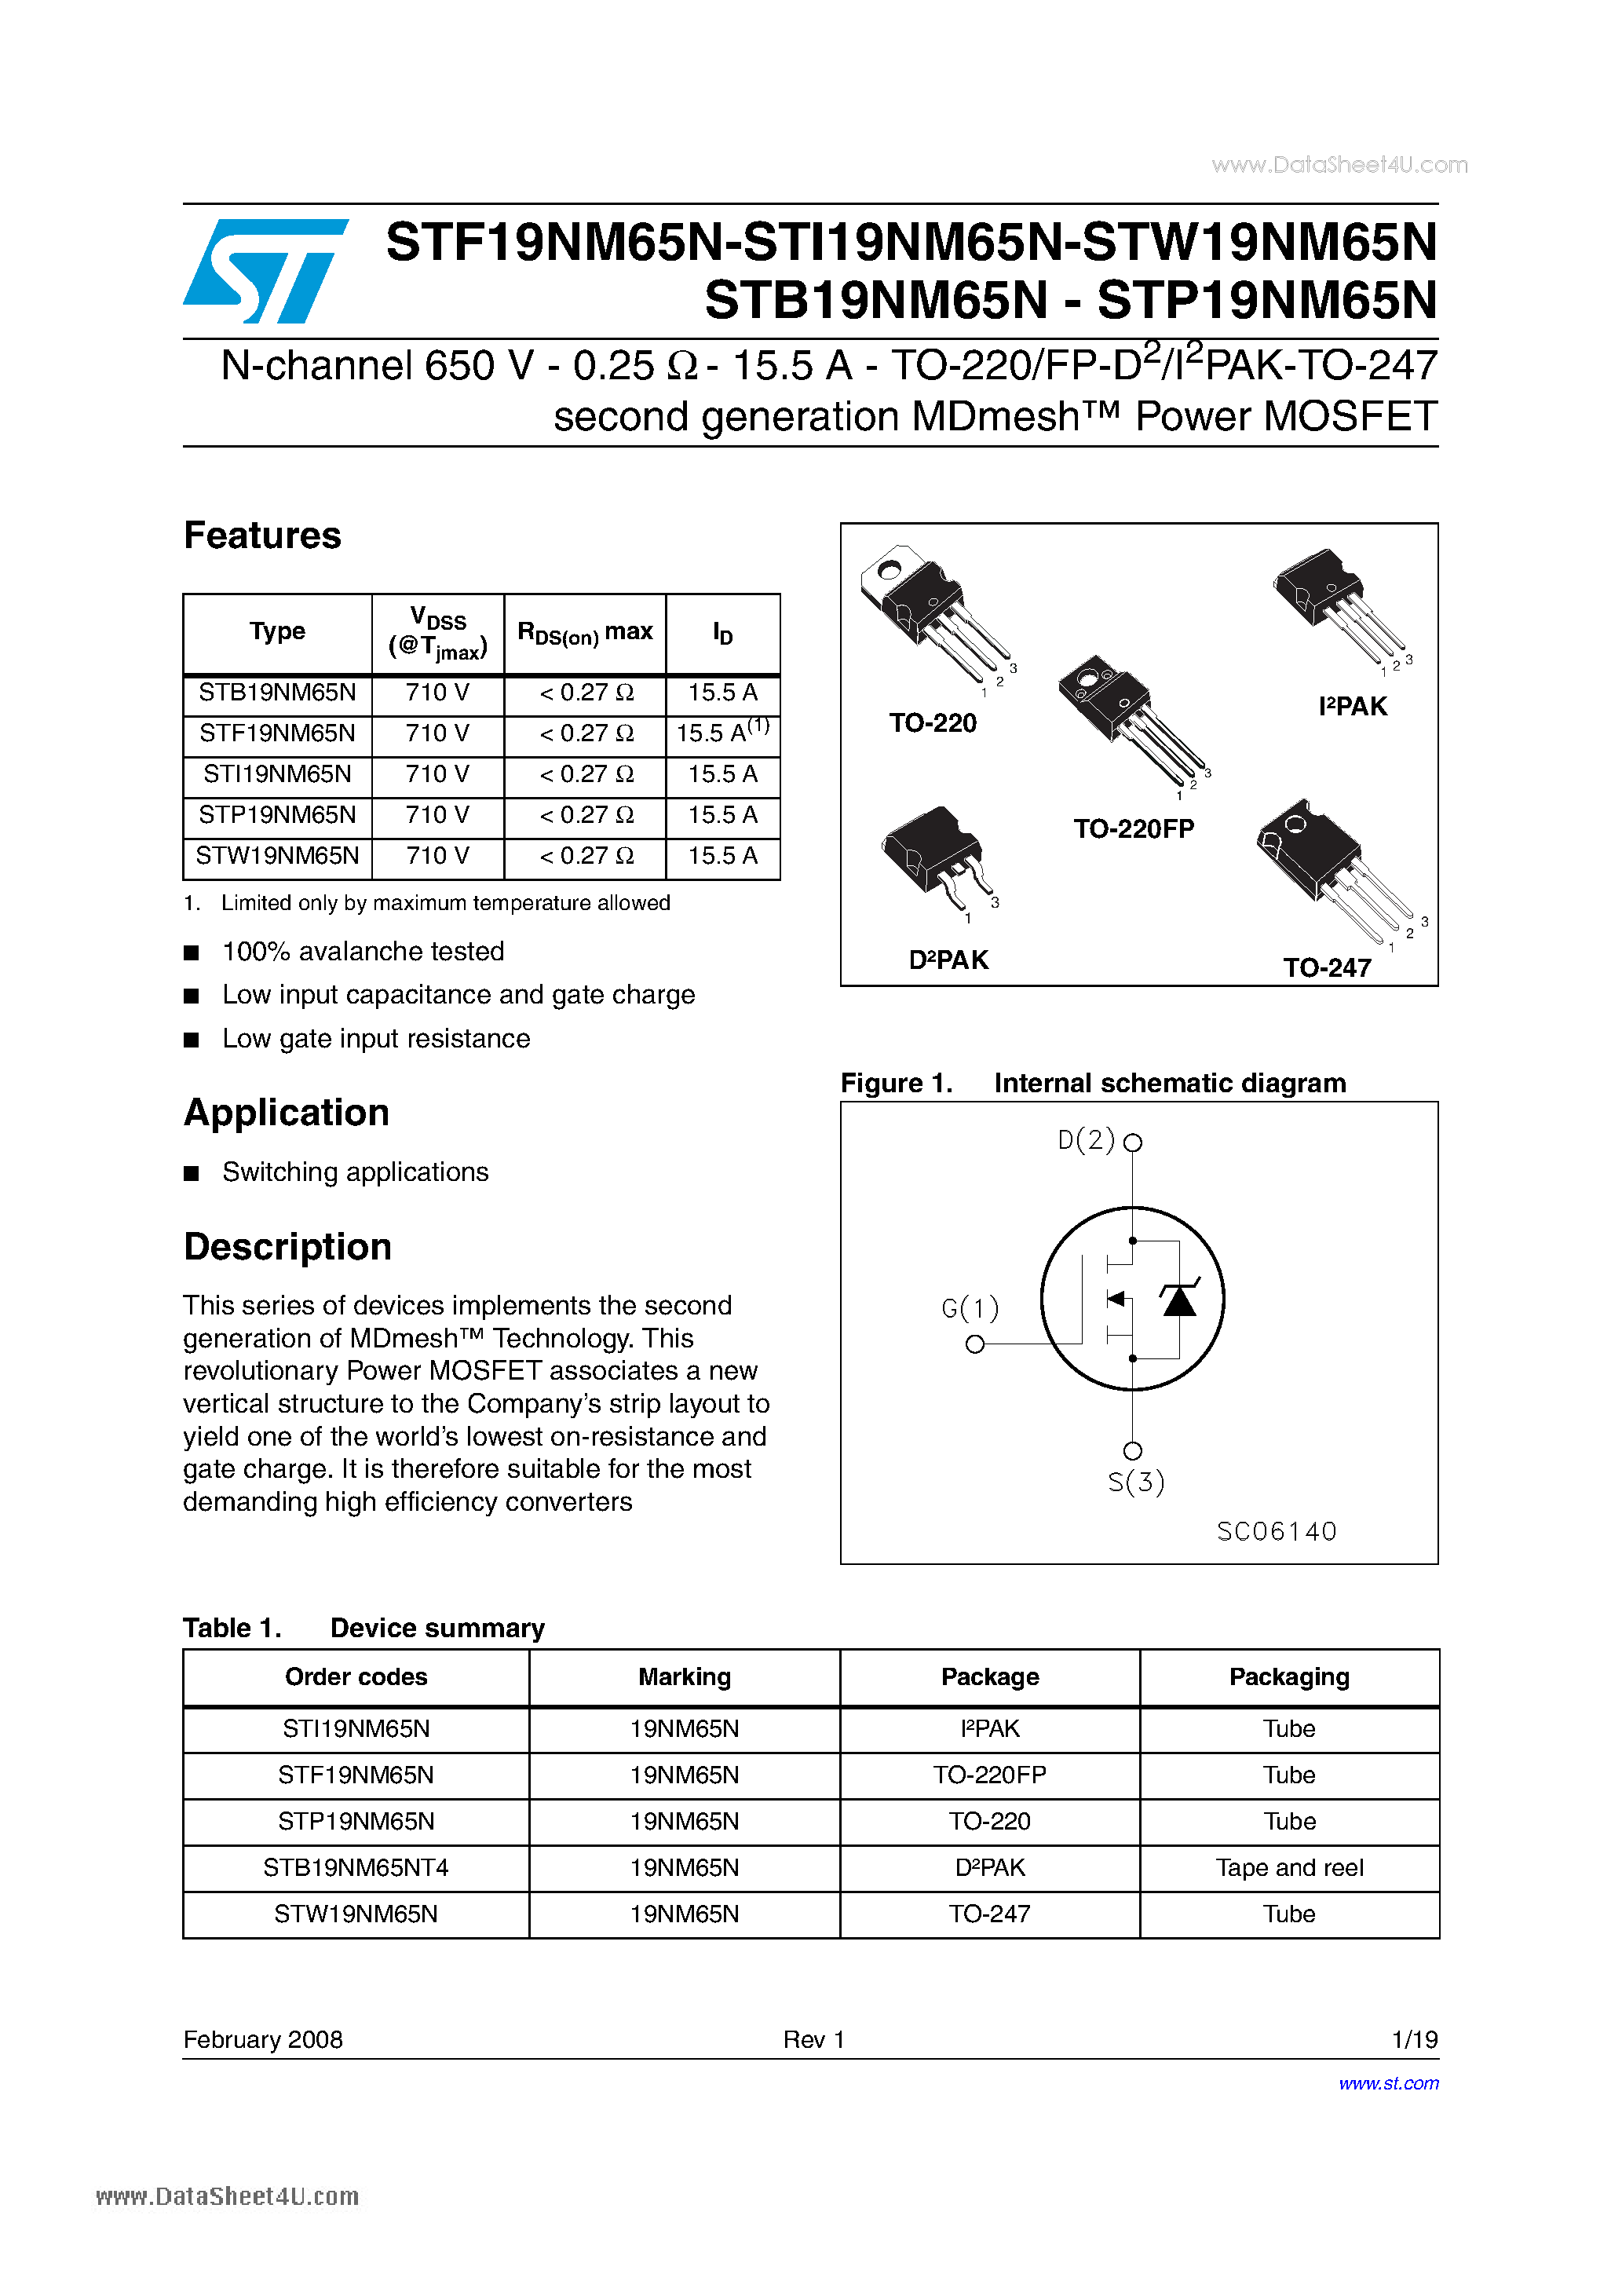 Даташит STP19NM65N - Power MOSFET страница 1